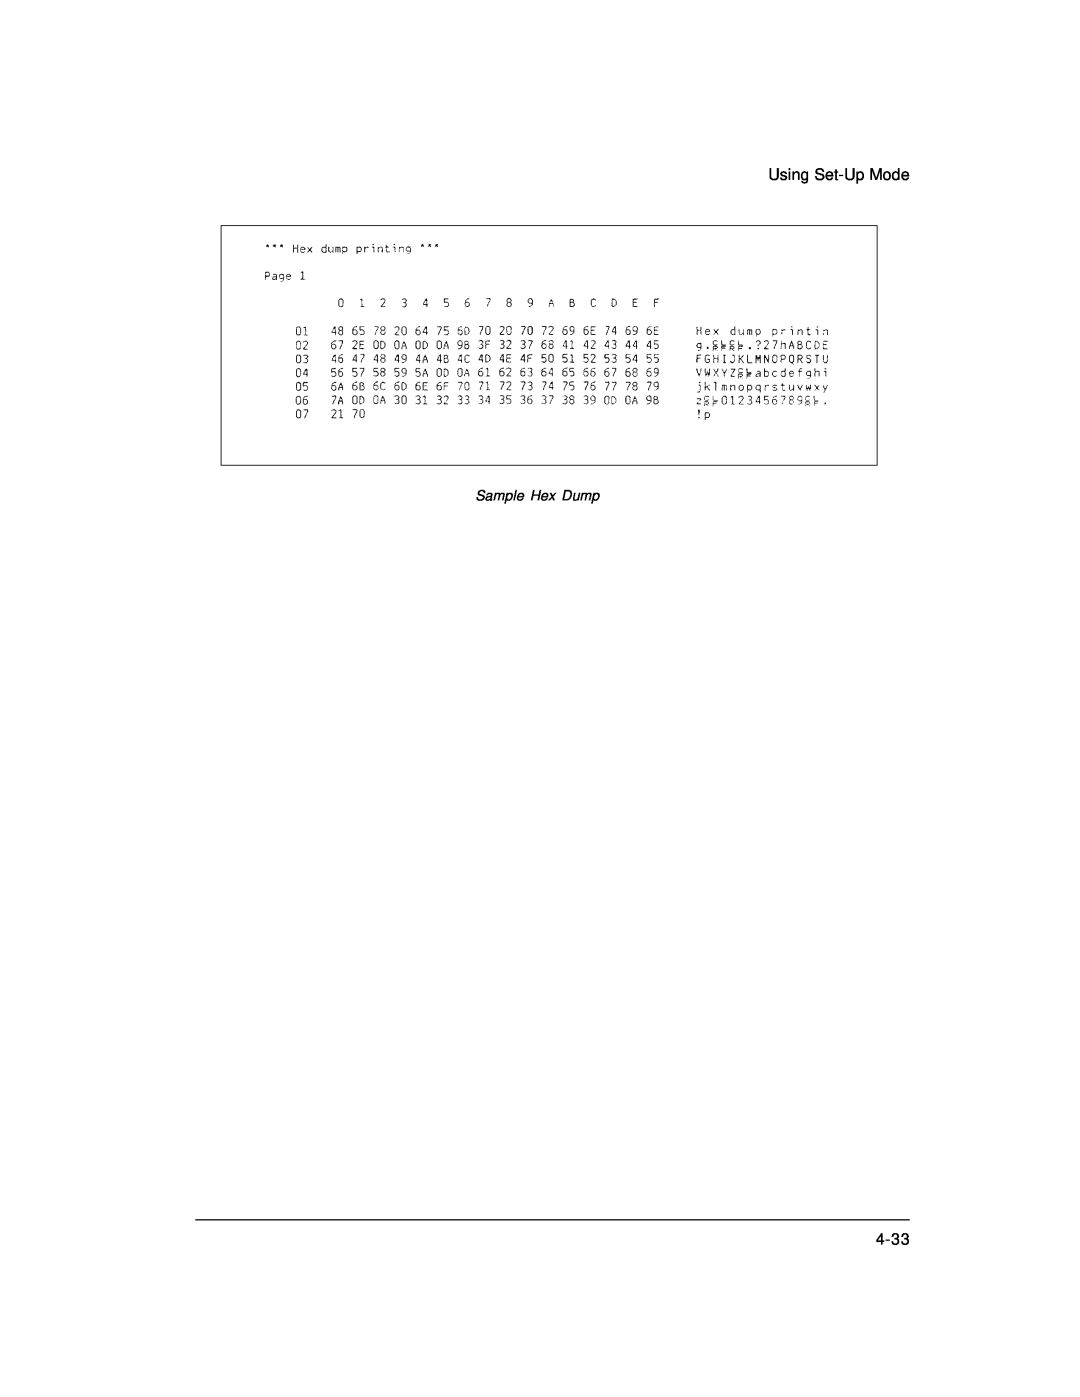 Genicom LA36 manual Using Set-Up Mode, 4-33, Sample Hex Dump 